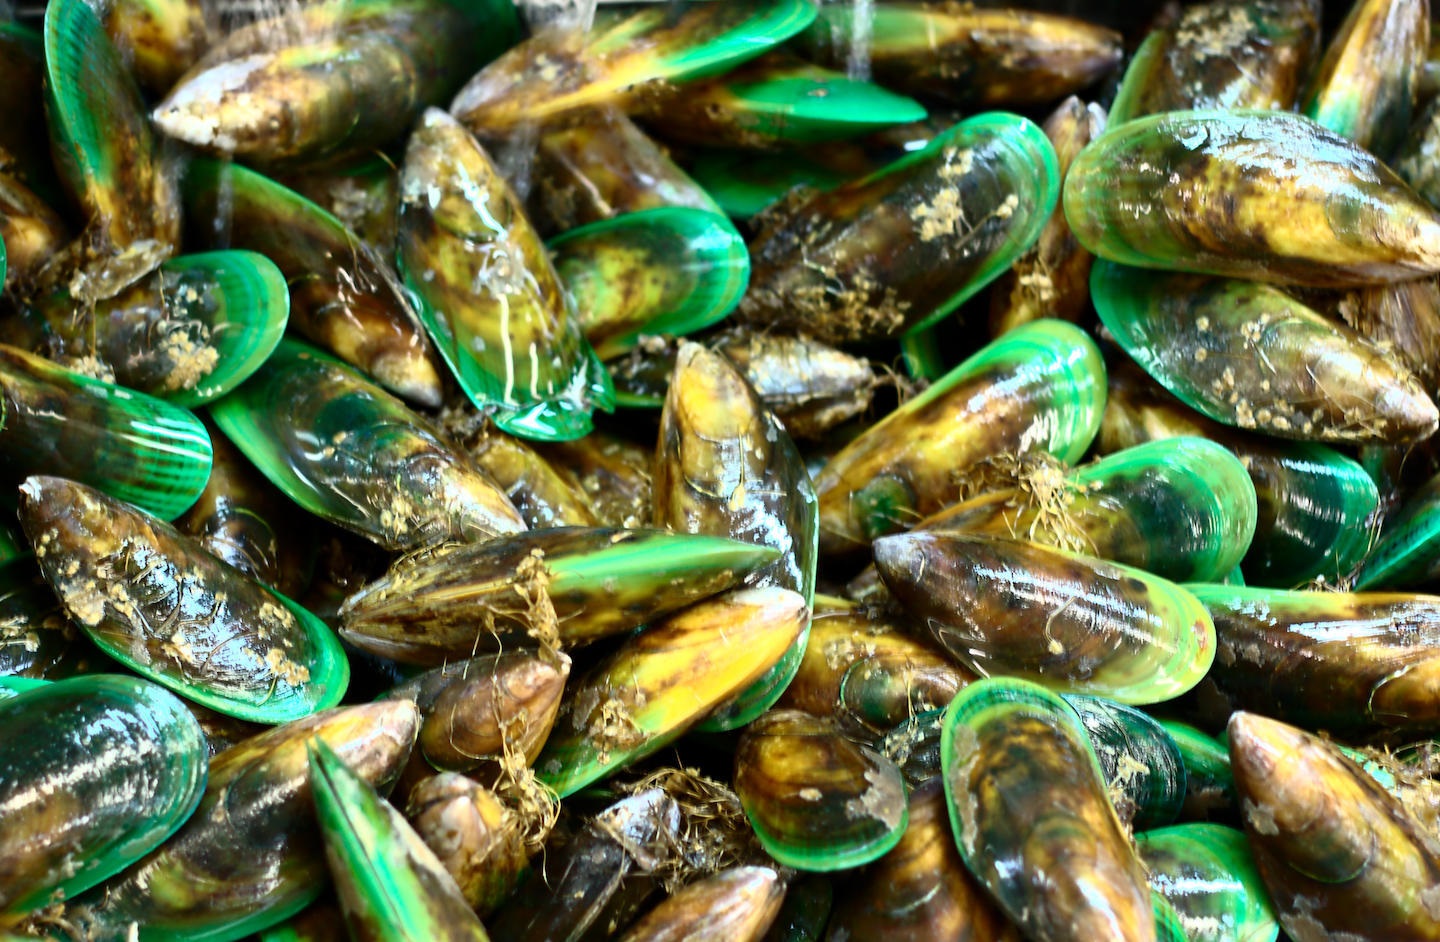 Kūtai_(green_lipped_mussels)